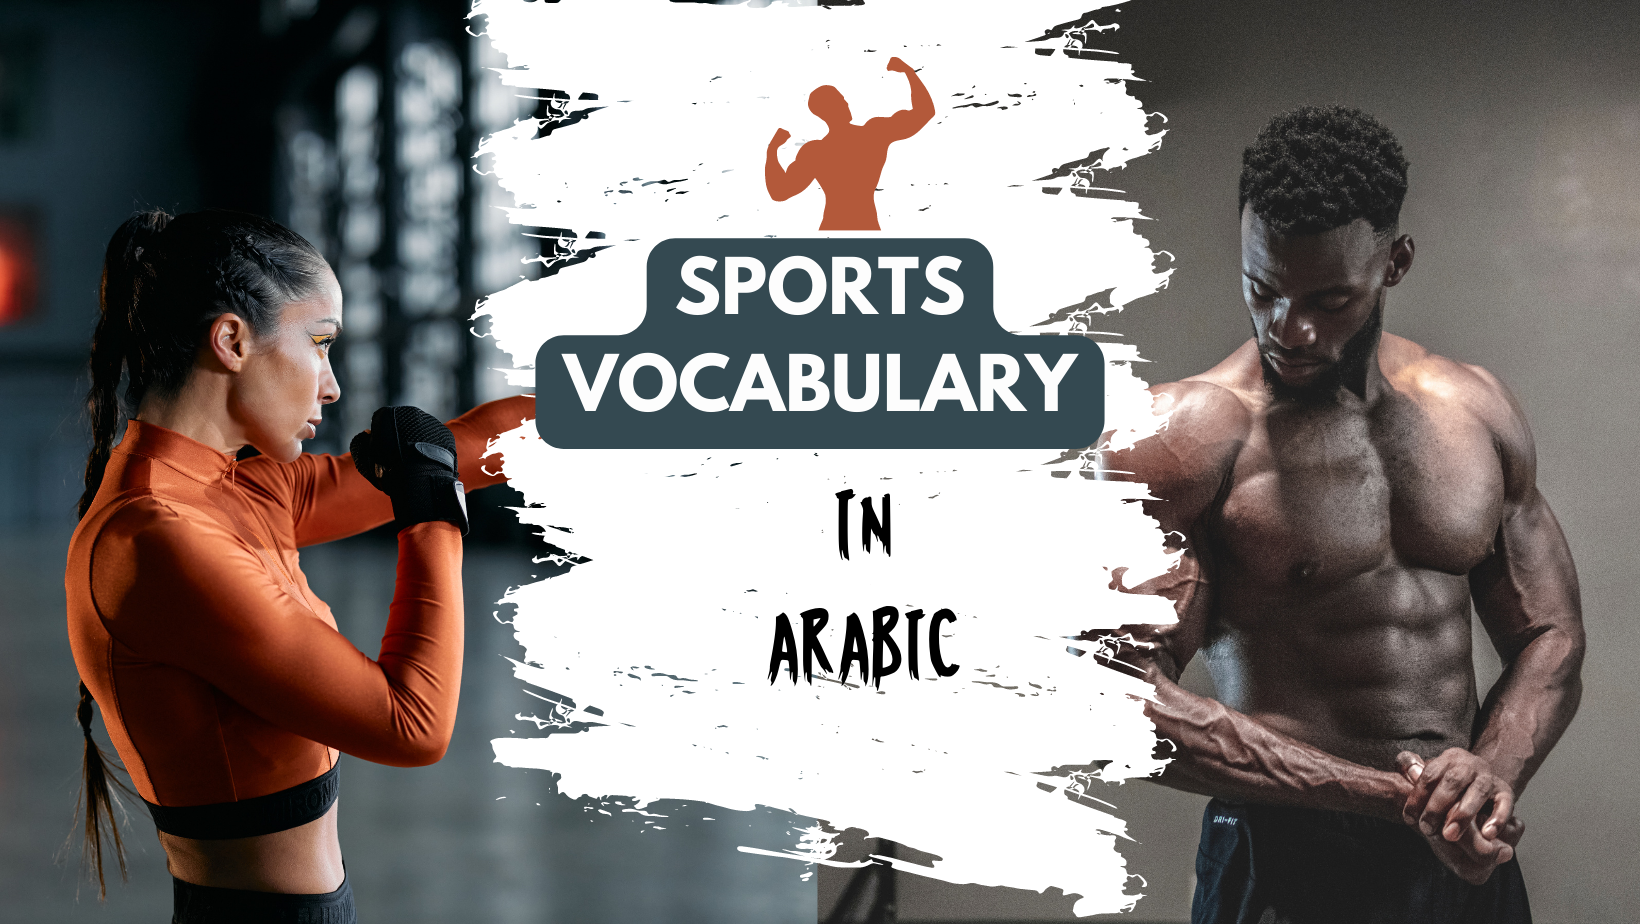 Sports vocabularies in Arabic